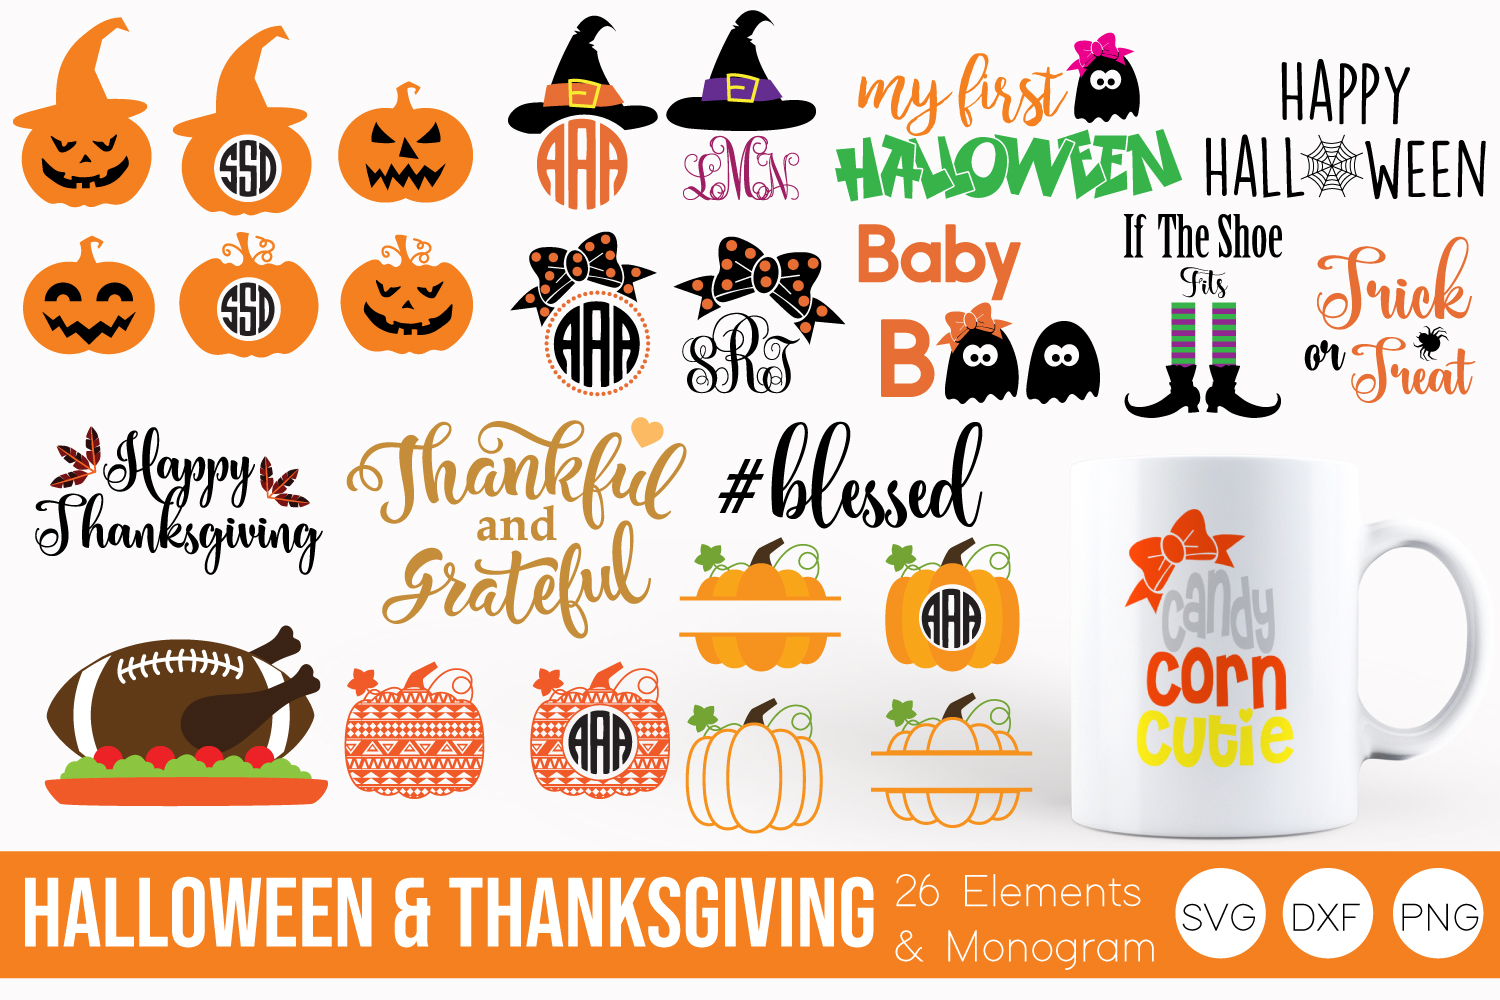 Download Halloween & Thanksgiving SVG, DXF, PNG Bundle Cut Files